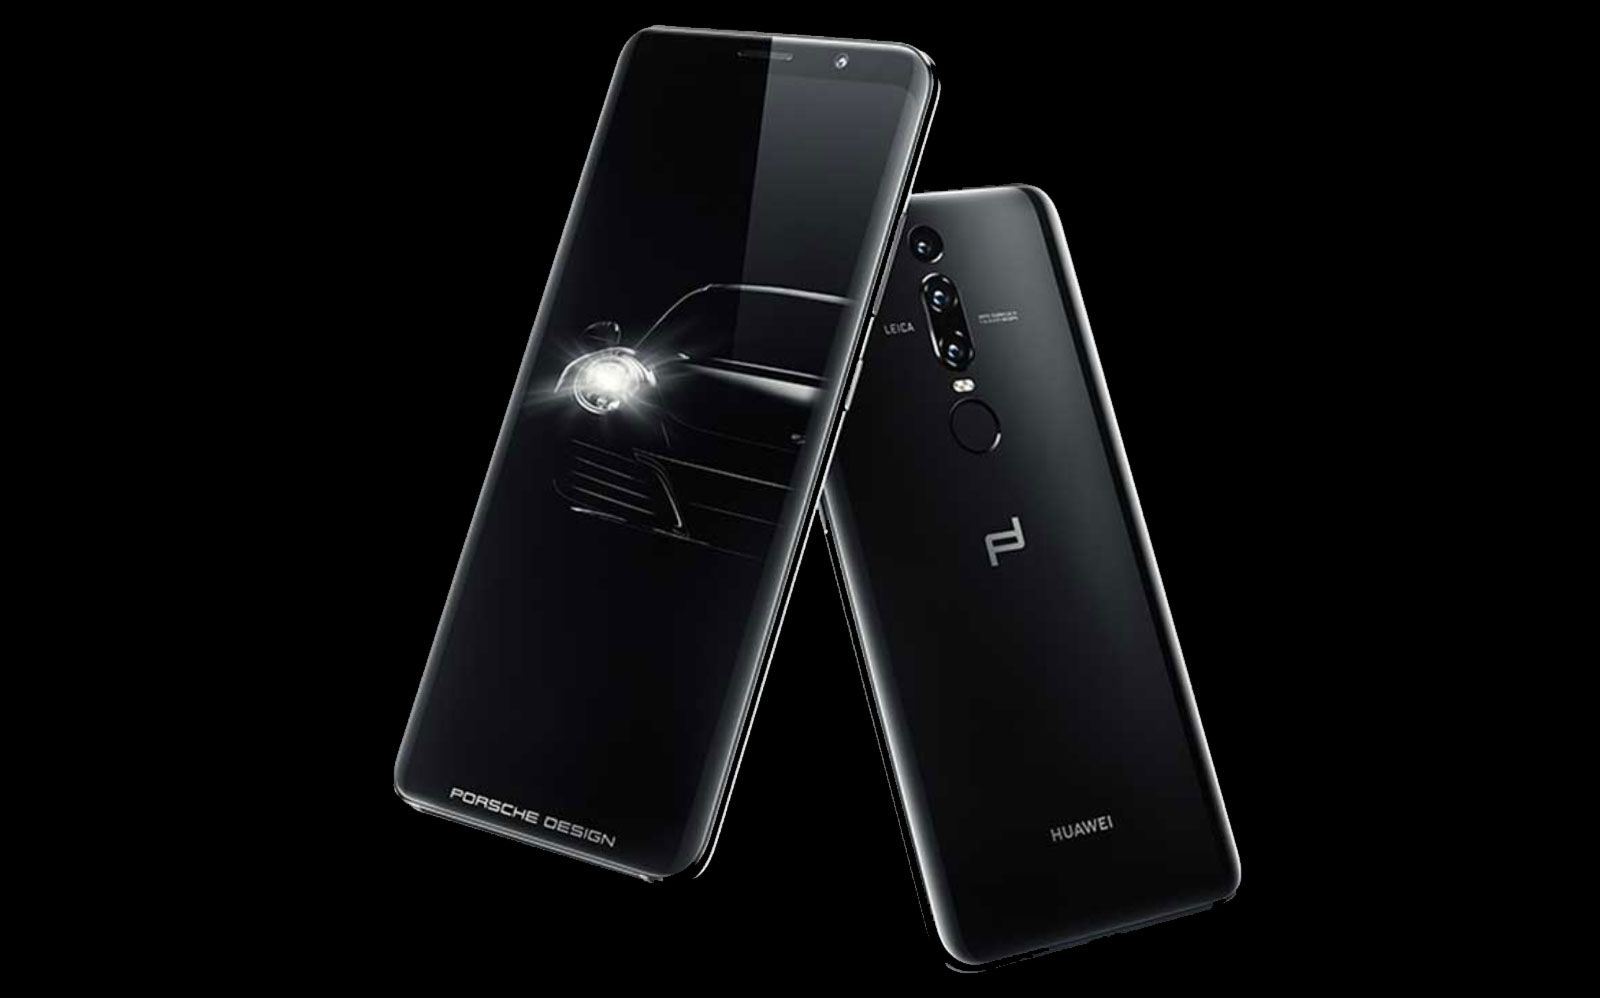 Huawei เริ่มใช้หน้าจอ OLED ที่ผลิตโดย LG ประเดิมรุ่นแรกด้วย Huawei Mate RS